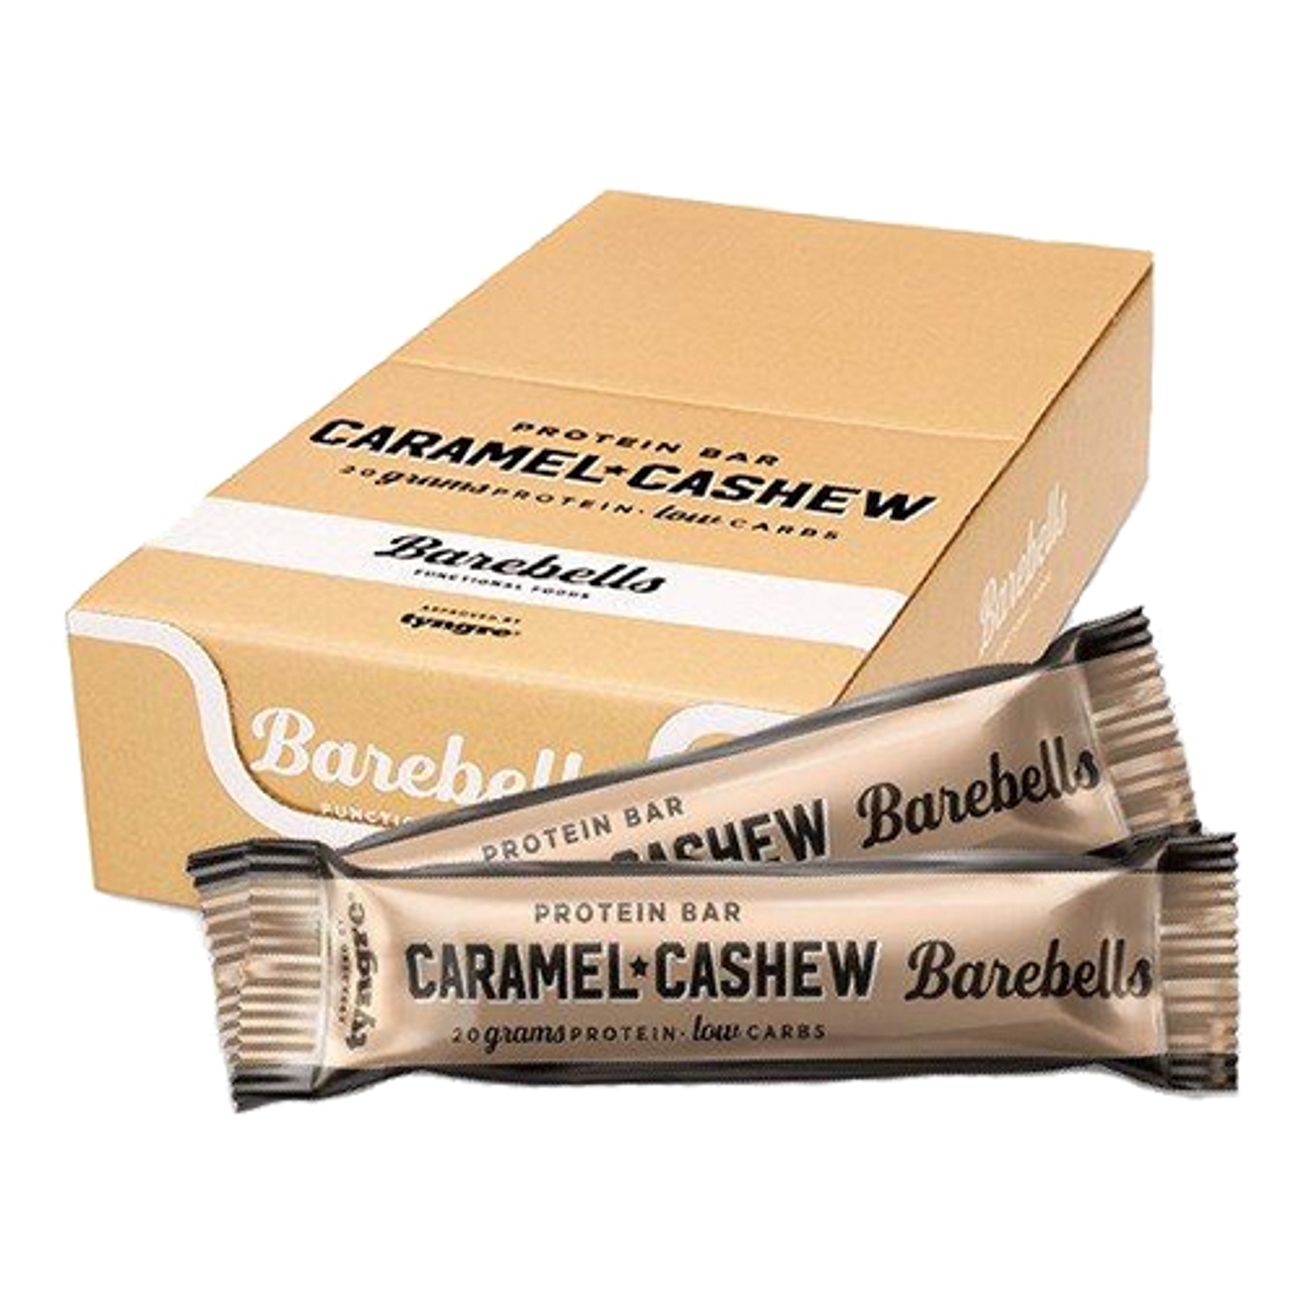 barebells-proteinbar-caramel-cashew-2